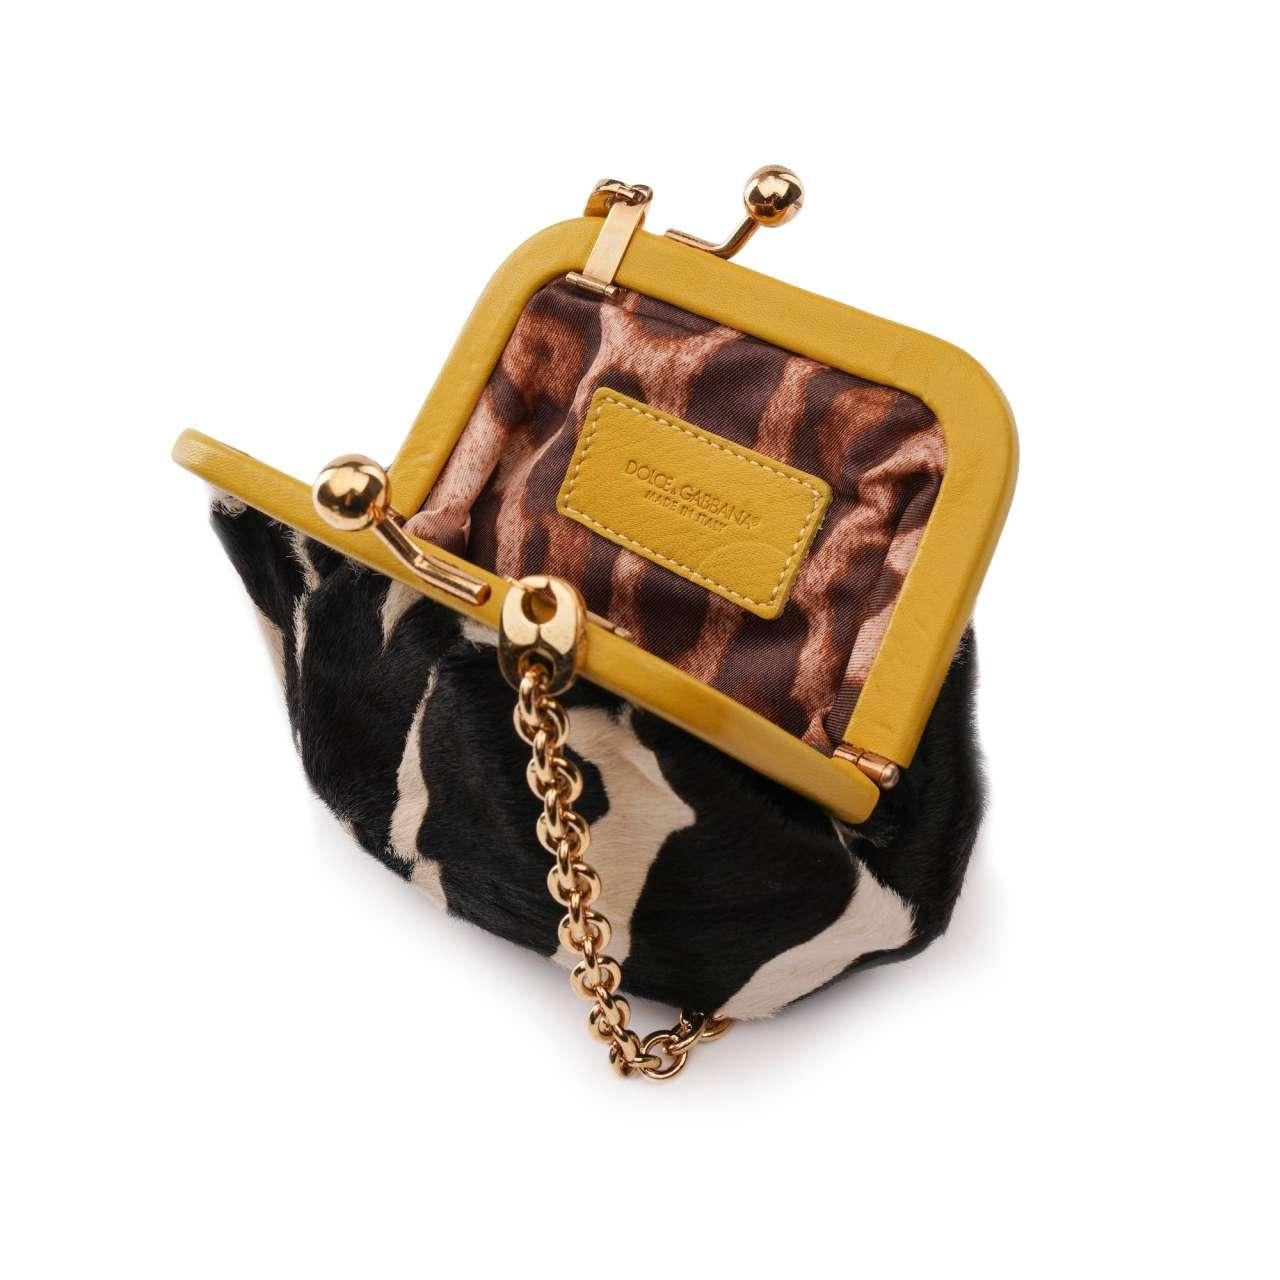 Dolce & Gabbana Star Metal Chain Zebra Fur Clutch Purse Bag Gold Black White In Excellent Condition For Sale In Erkrath, DE